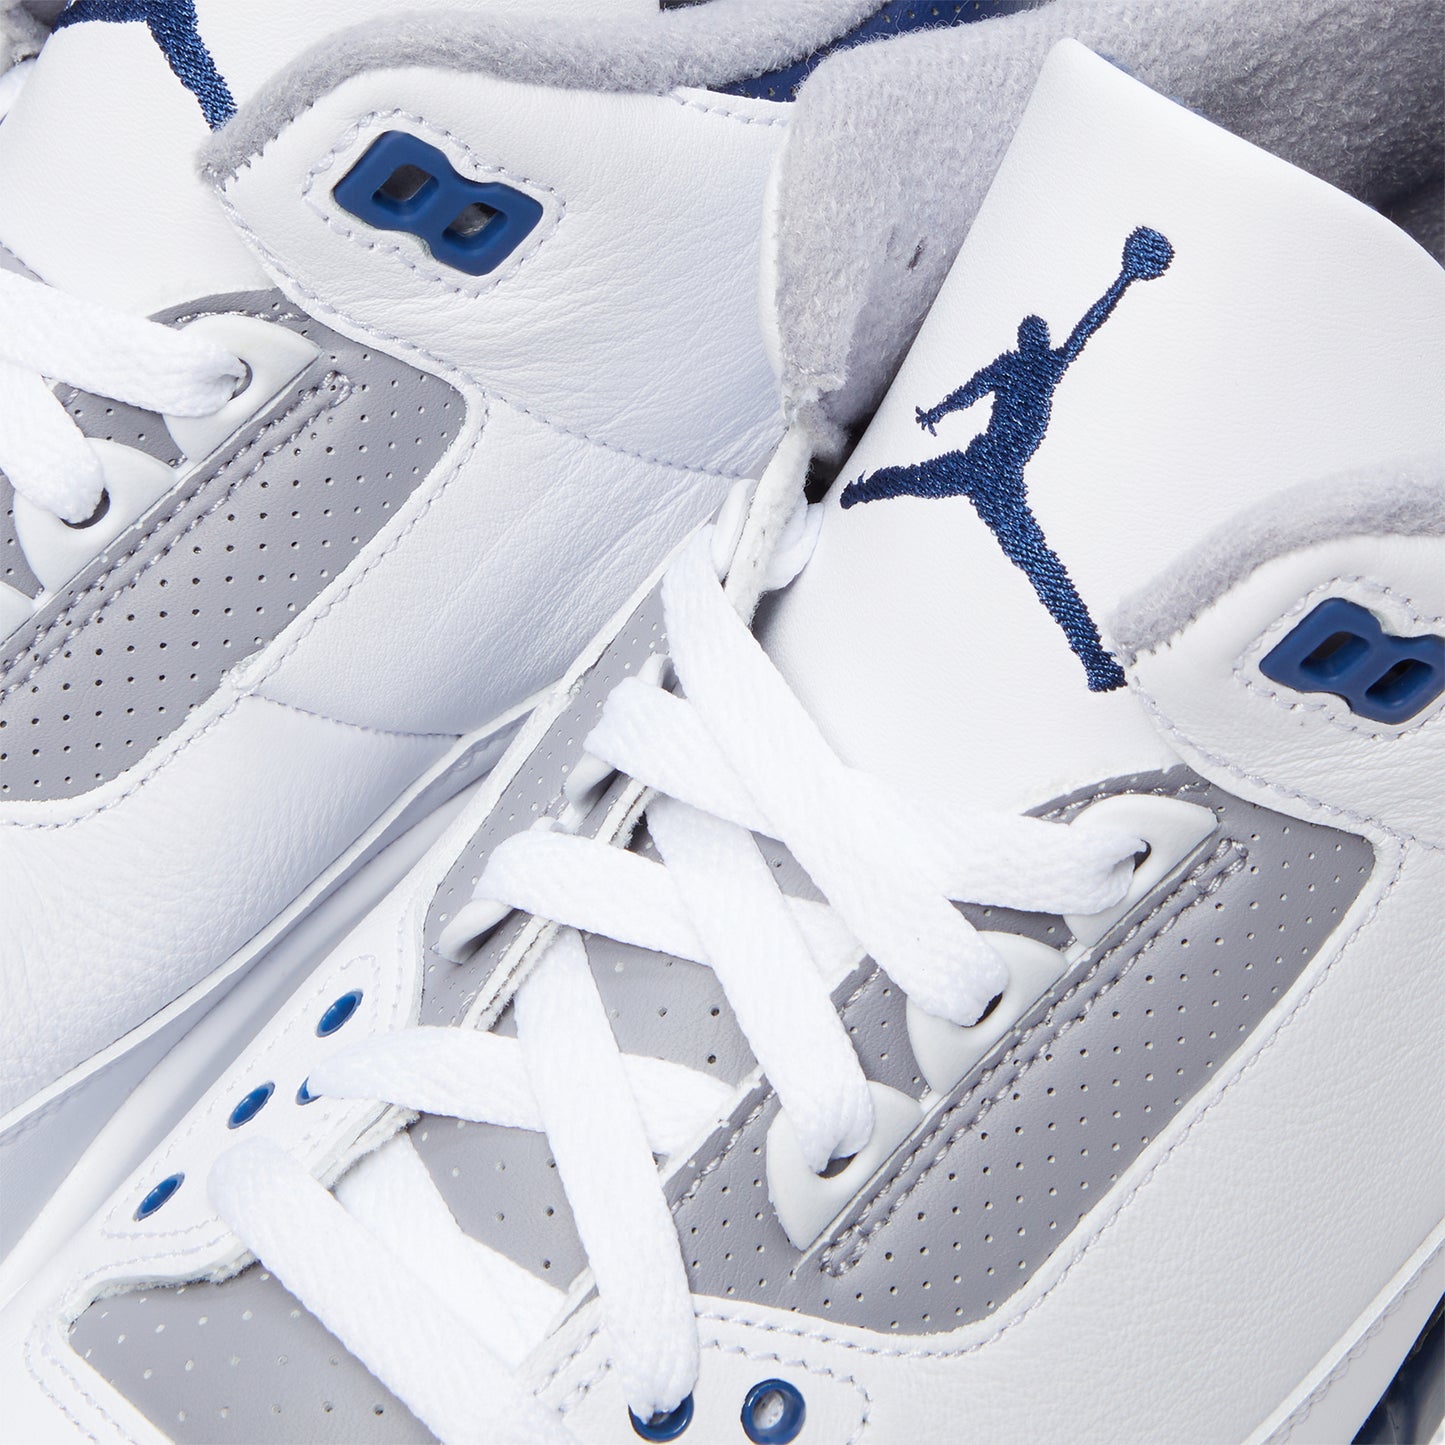 Nike Kids Air Jordan 3 Retro (White/Midnight Navy/Cement Grey)